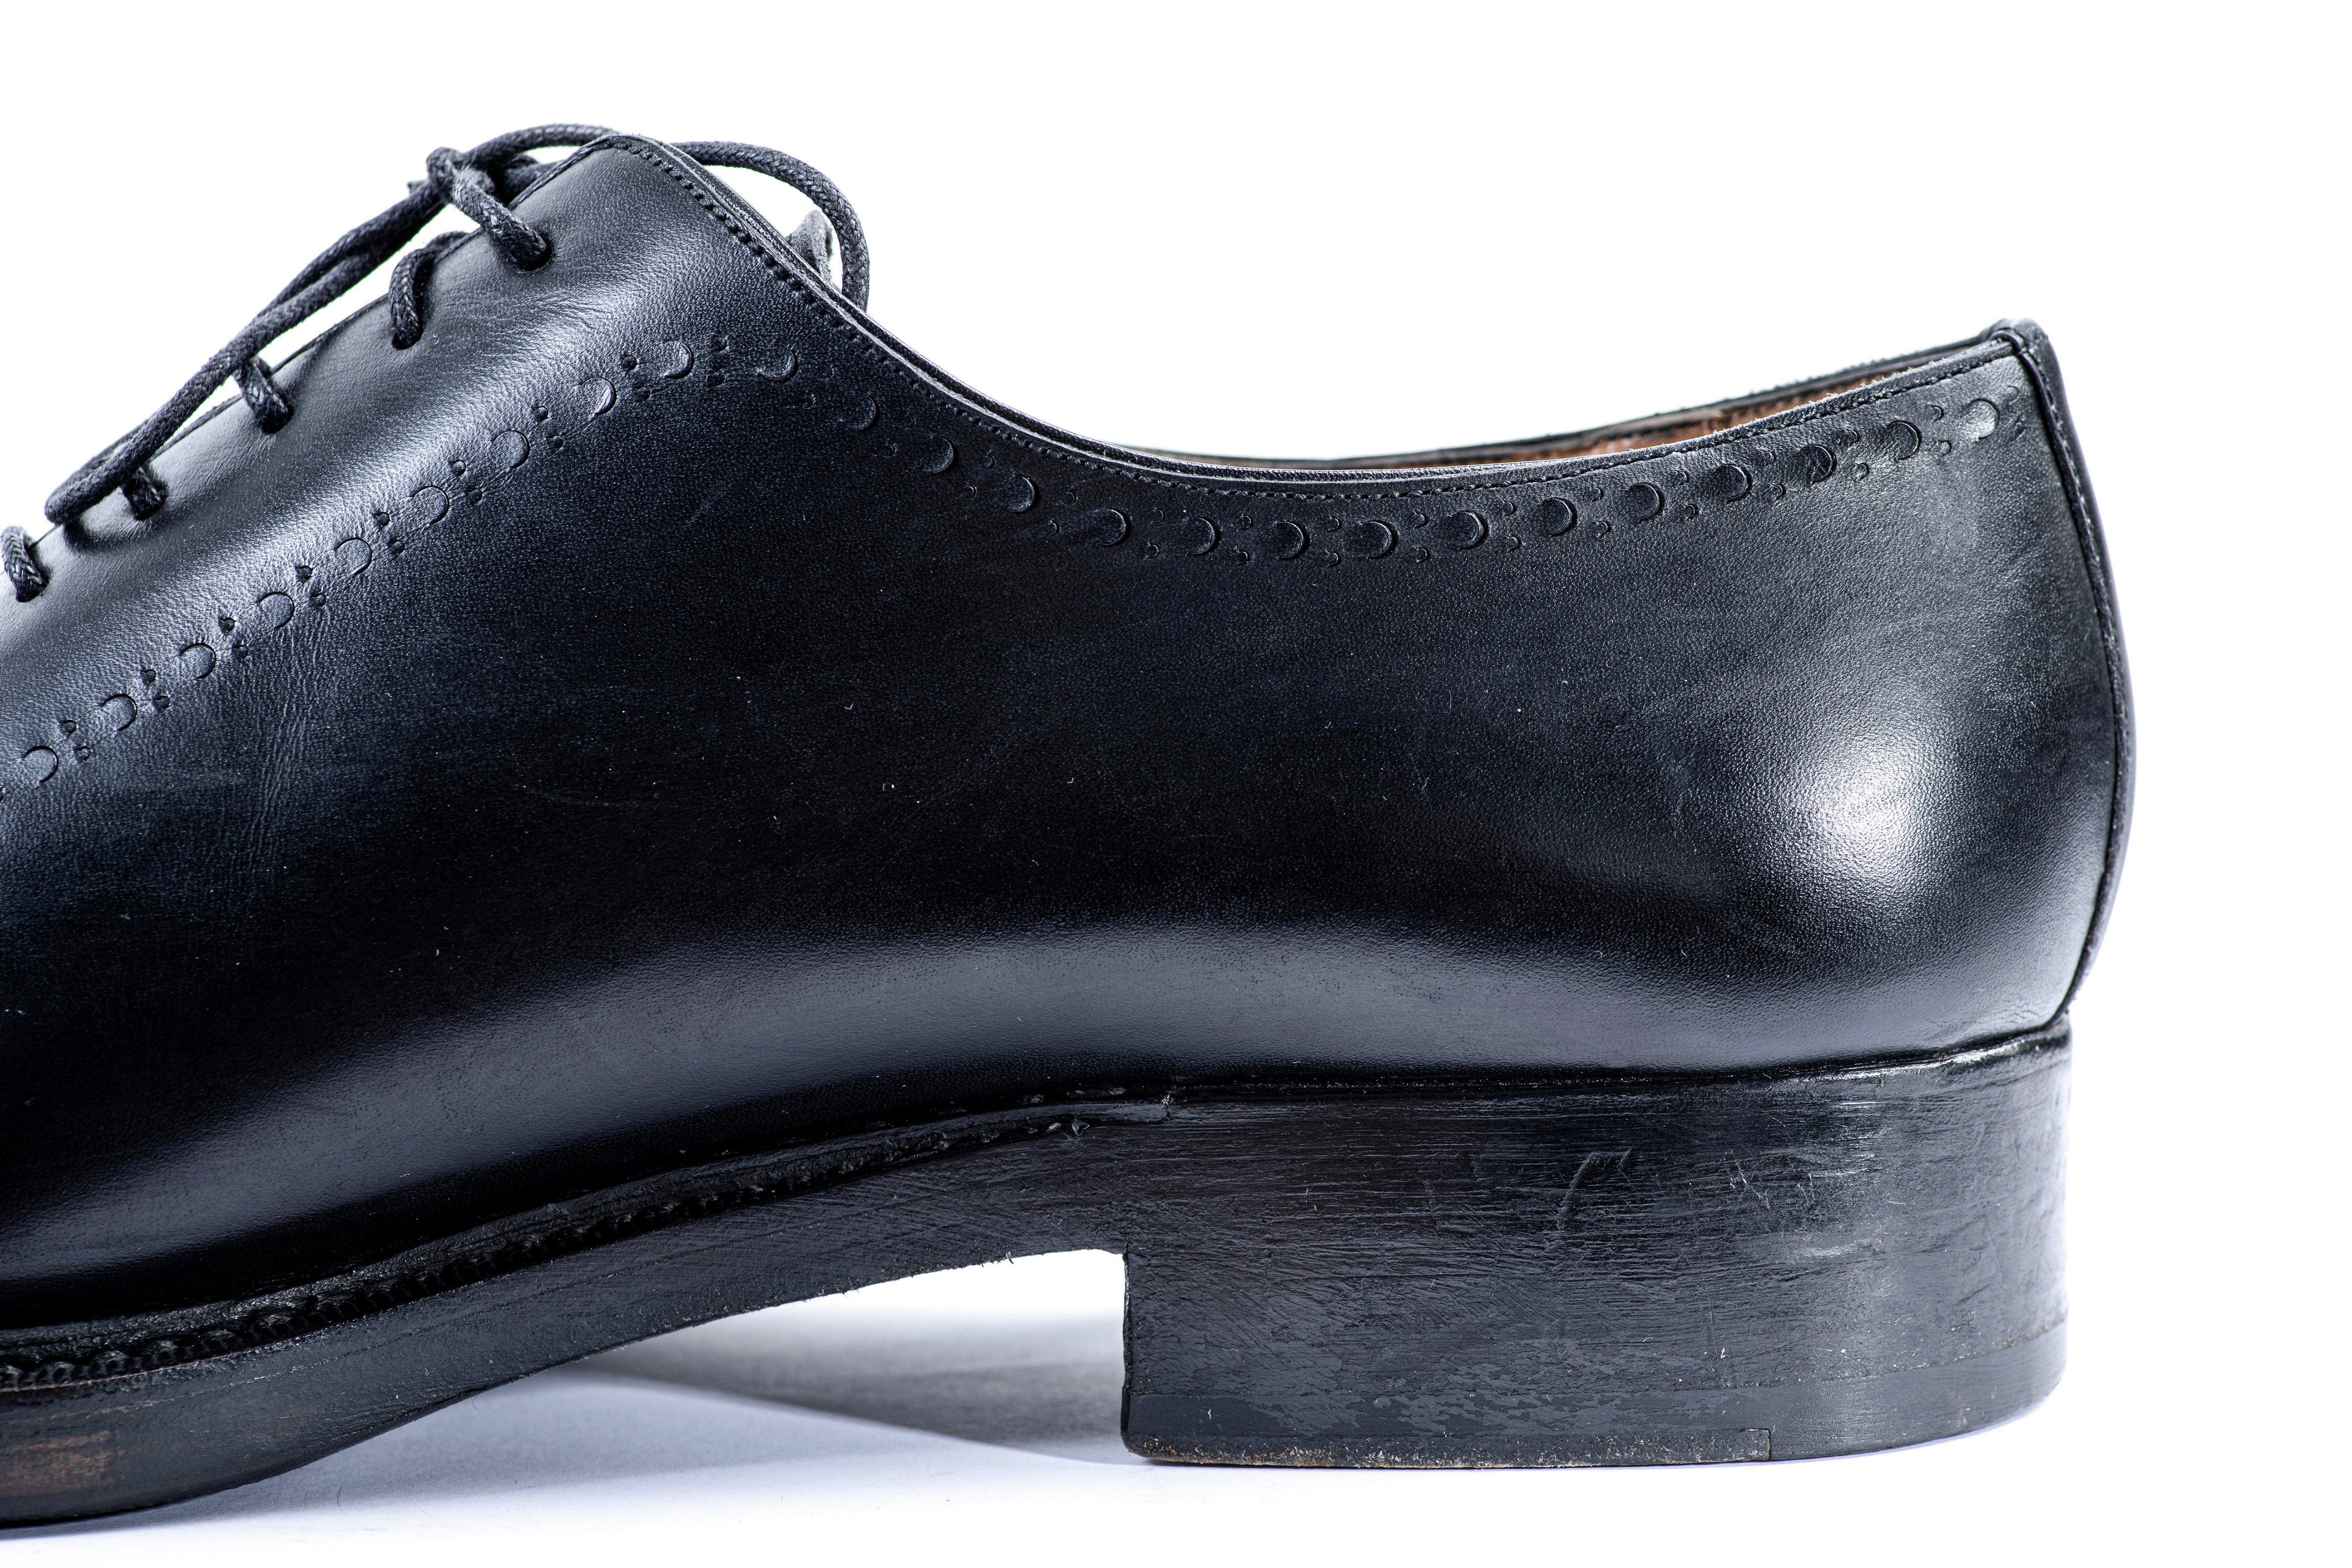 SANTONI Fatte A Mano Wholecut Black Leather Bentivegna Welted Oxford Shoes, 11 F